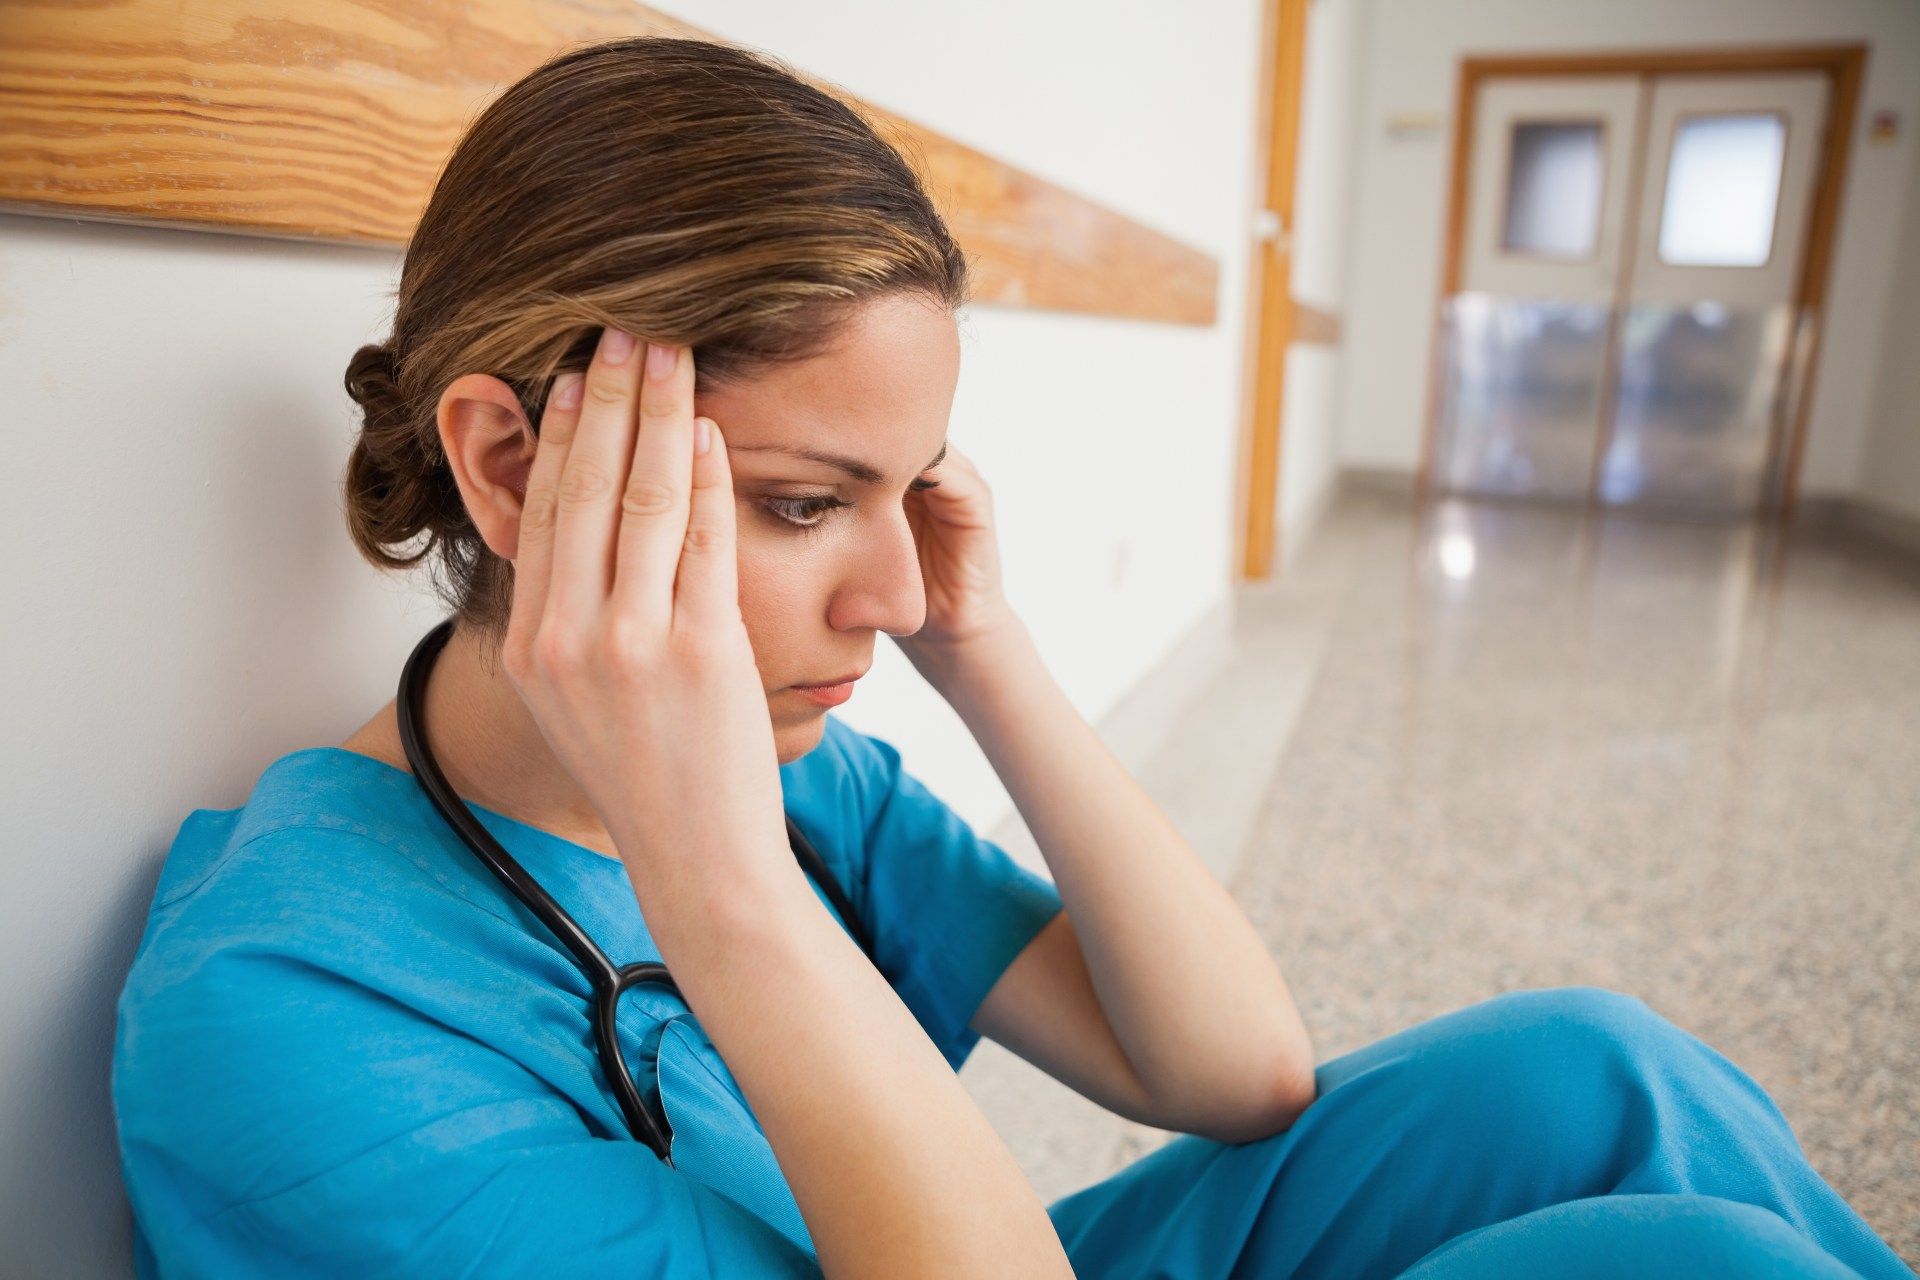 A nurse in blue scrubs sits on a hospital hallway floor, rubbing her temples - coronavirus outbreak